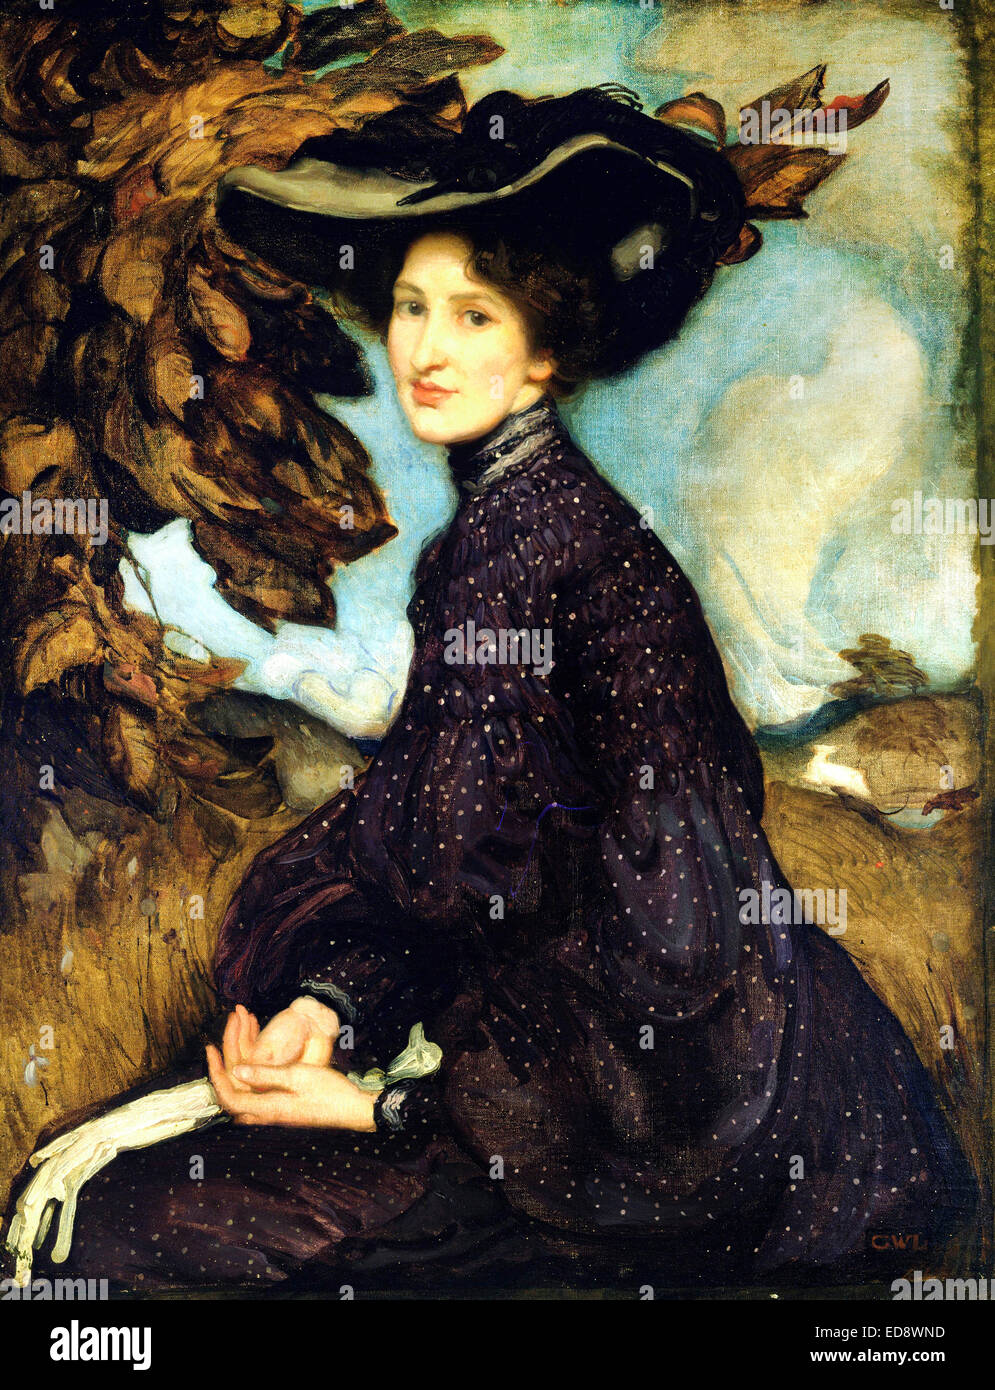 George Washington Lambert - Miss Thea Proctor 1903 Oil on canvas. Art Gallery of New South Wales, Sydney, Australia. Stock Photo